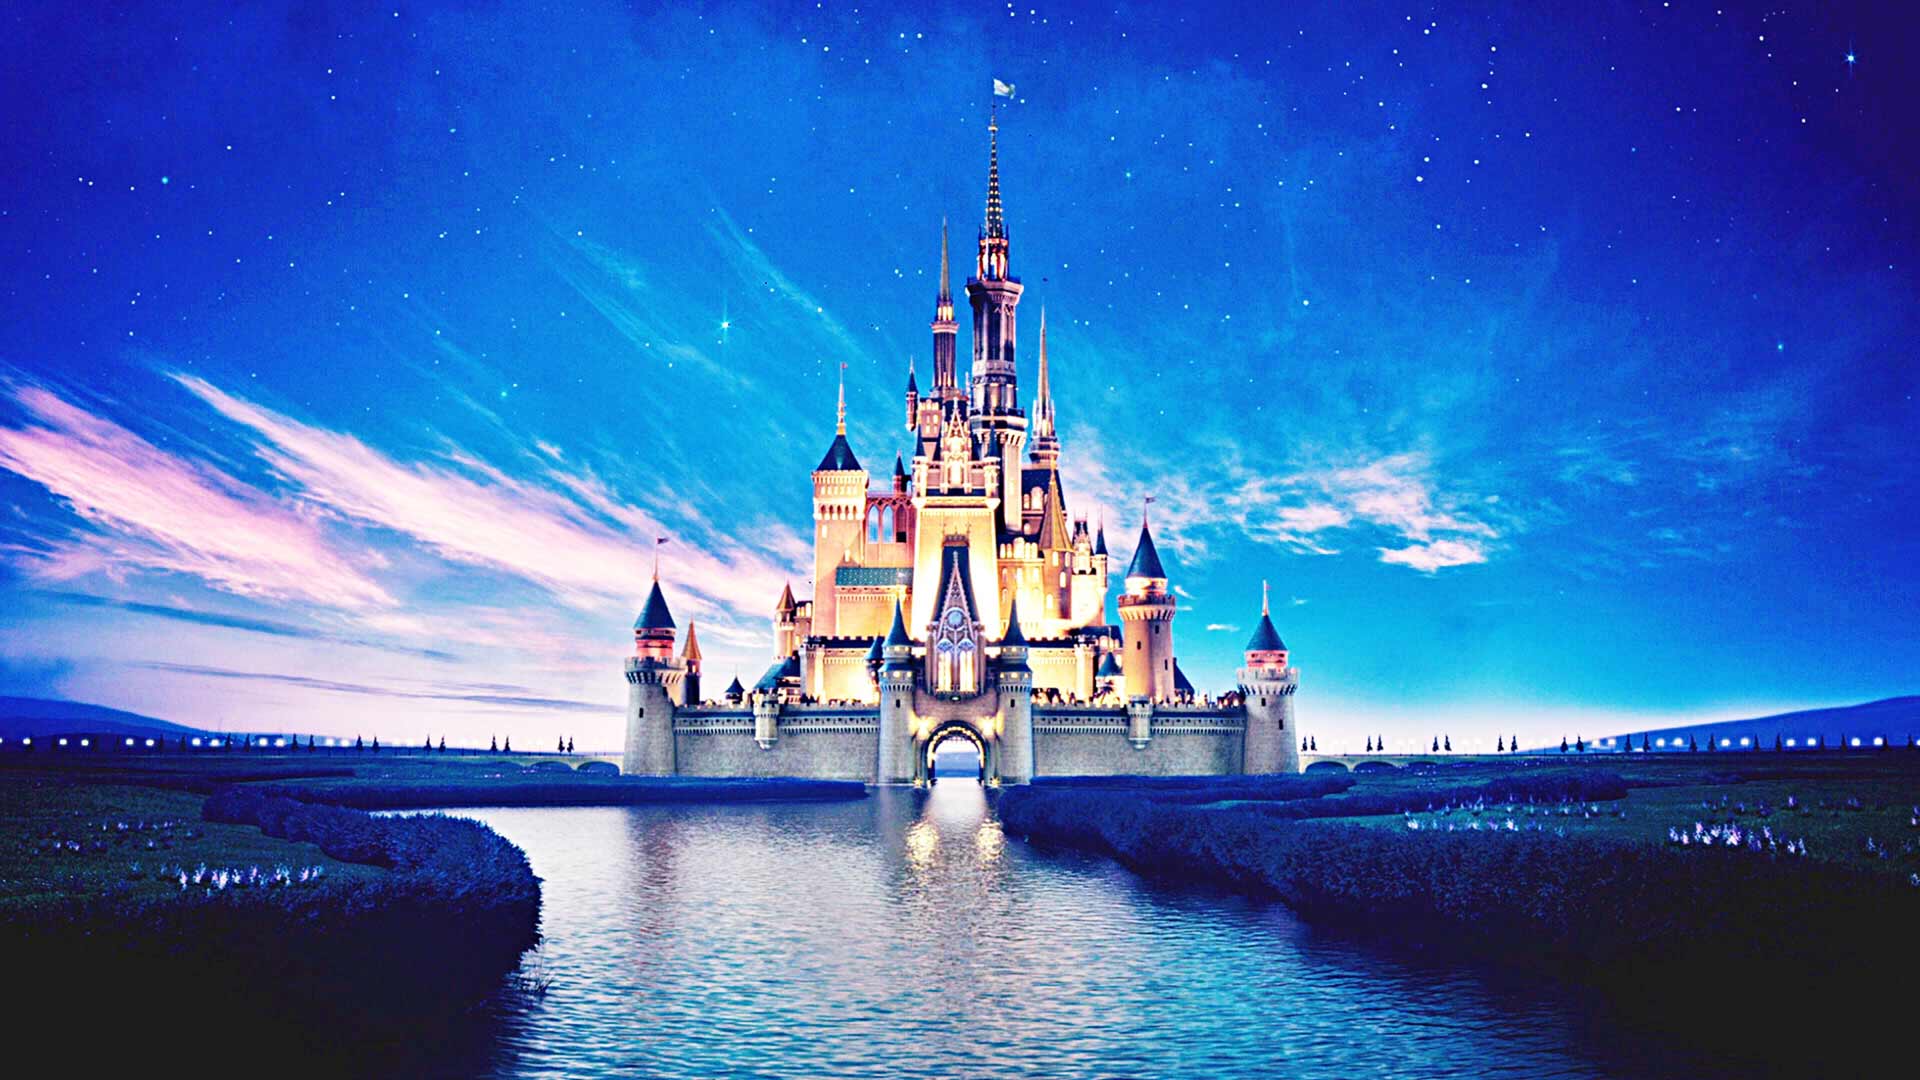 50+] Disney Castle Wallpaper HD - WallpaperSafari